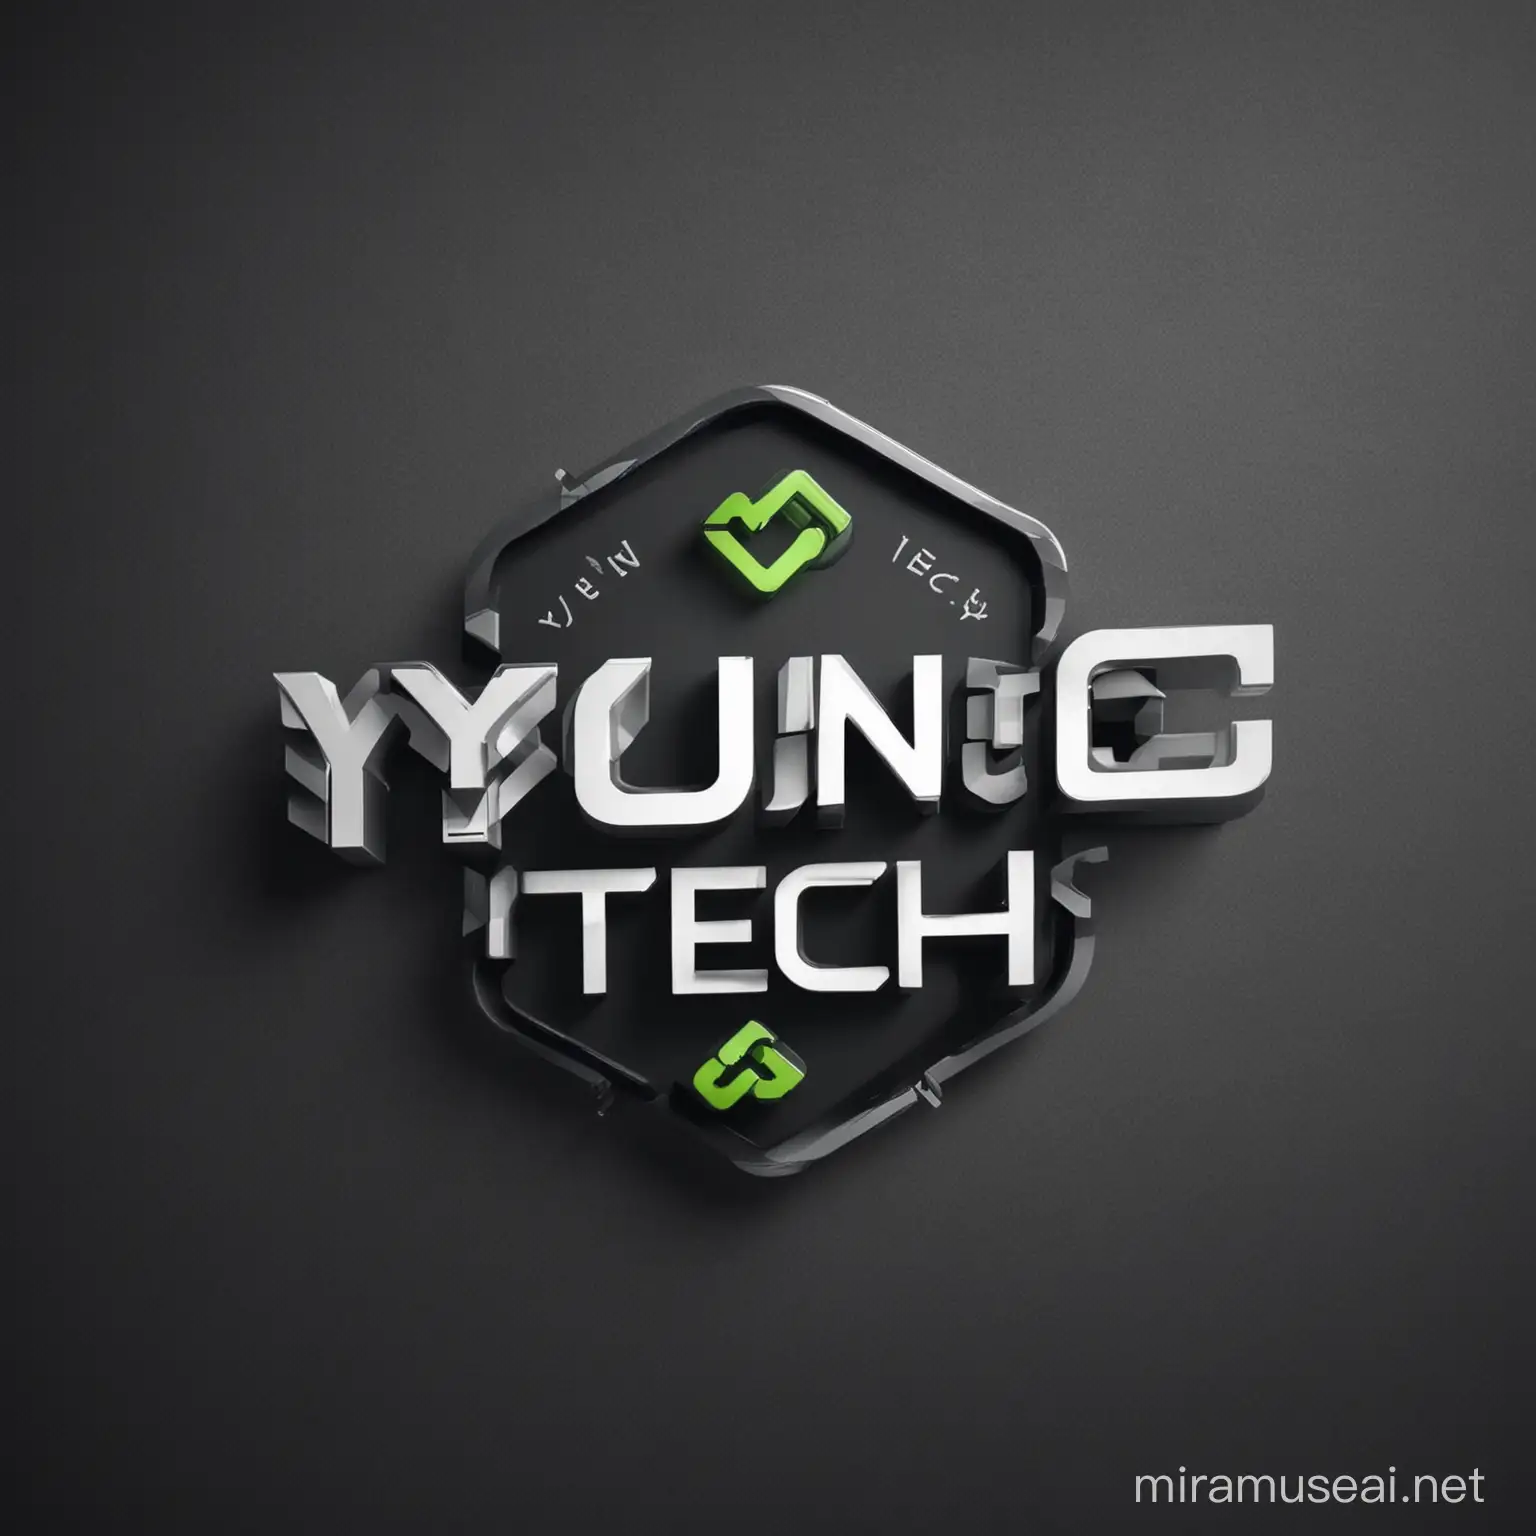 Modern and Sleek Logo Design for Young Tech